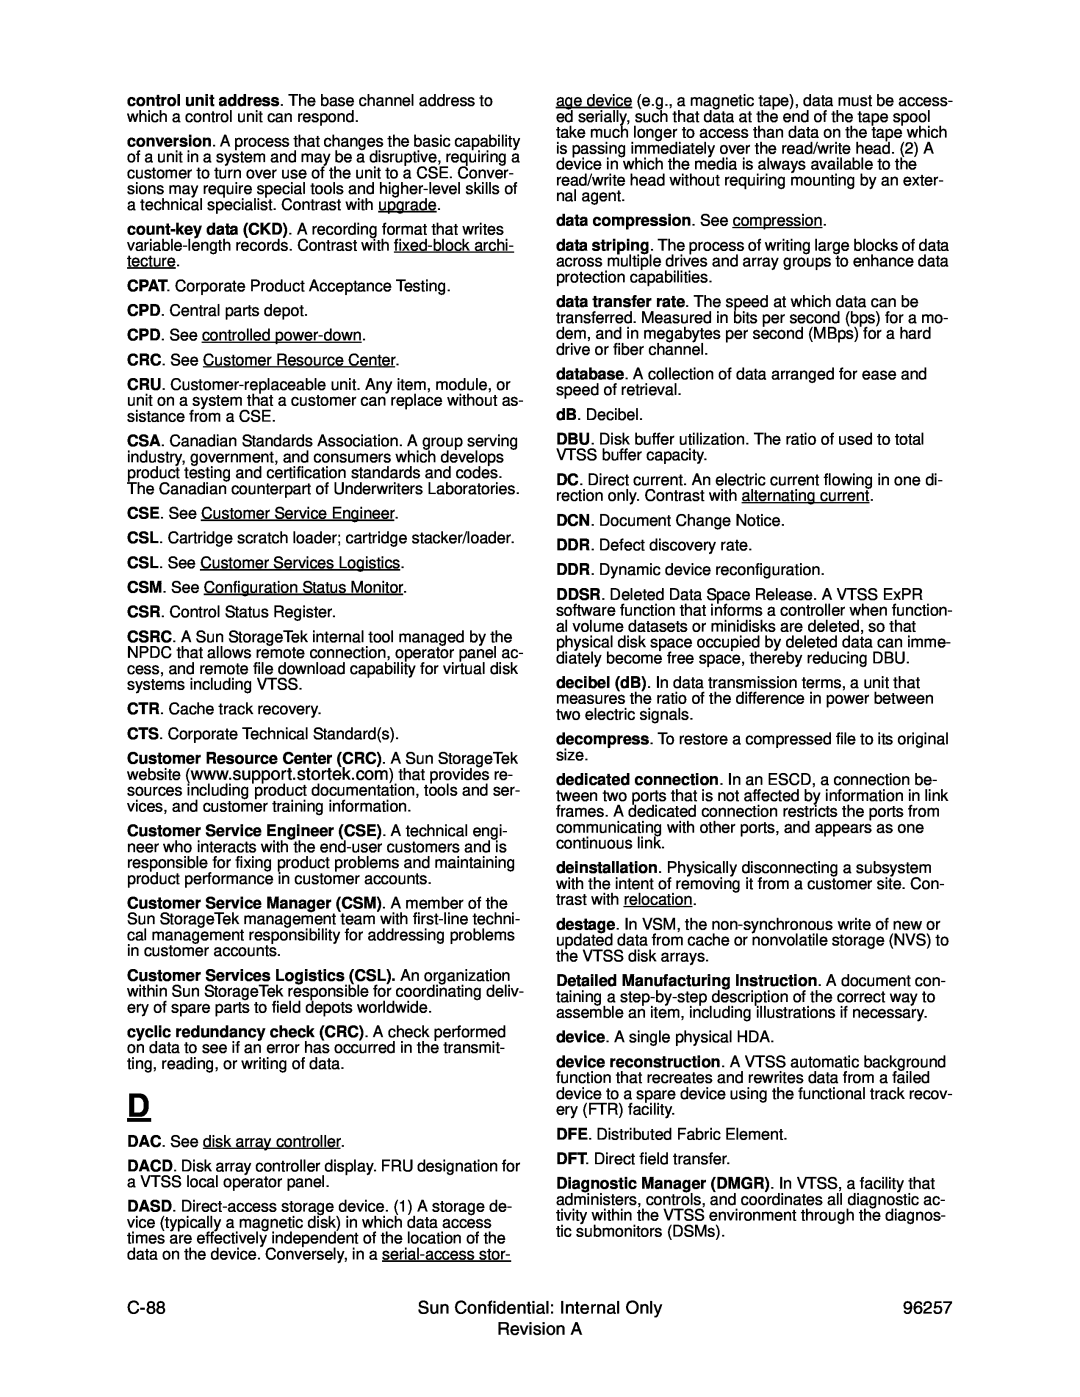 Sun Microsystems 96257 manual C-88, Sun Confidential Internal Only, Revision A 